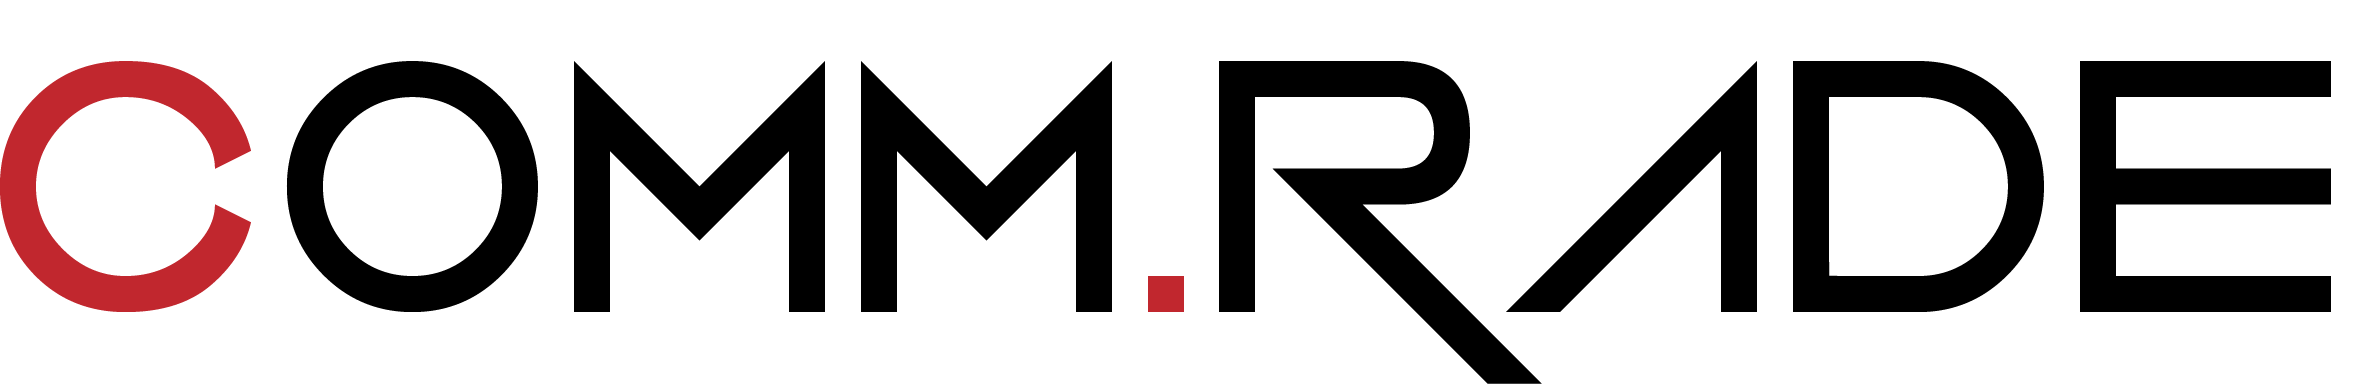 COMM.RADE logo